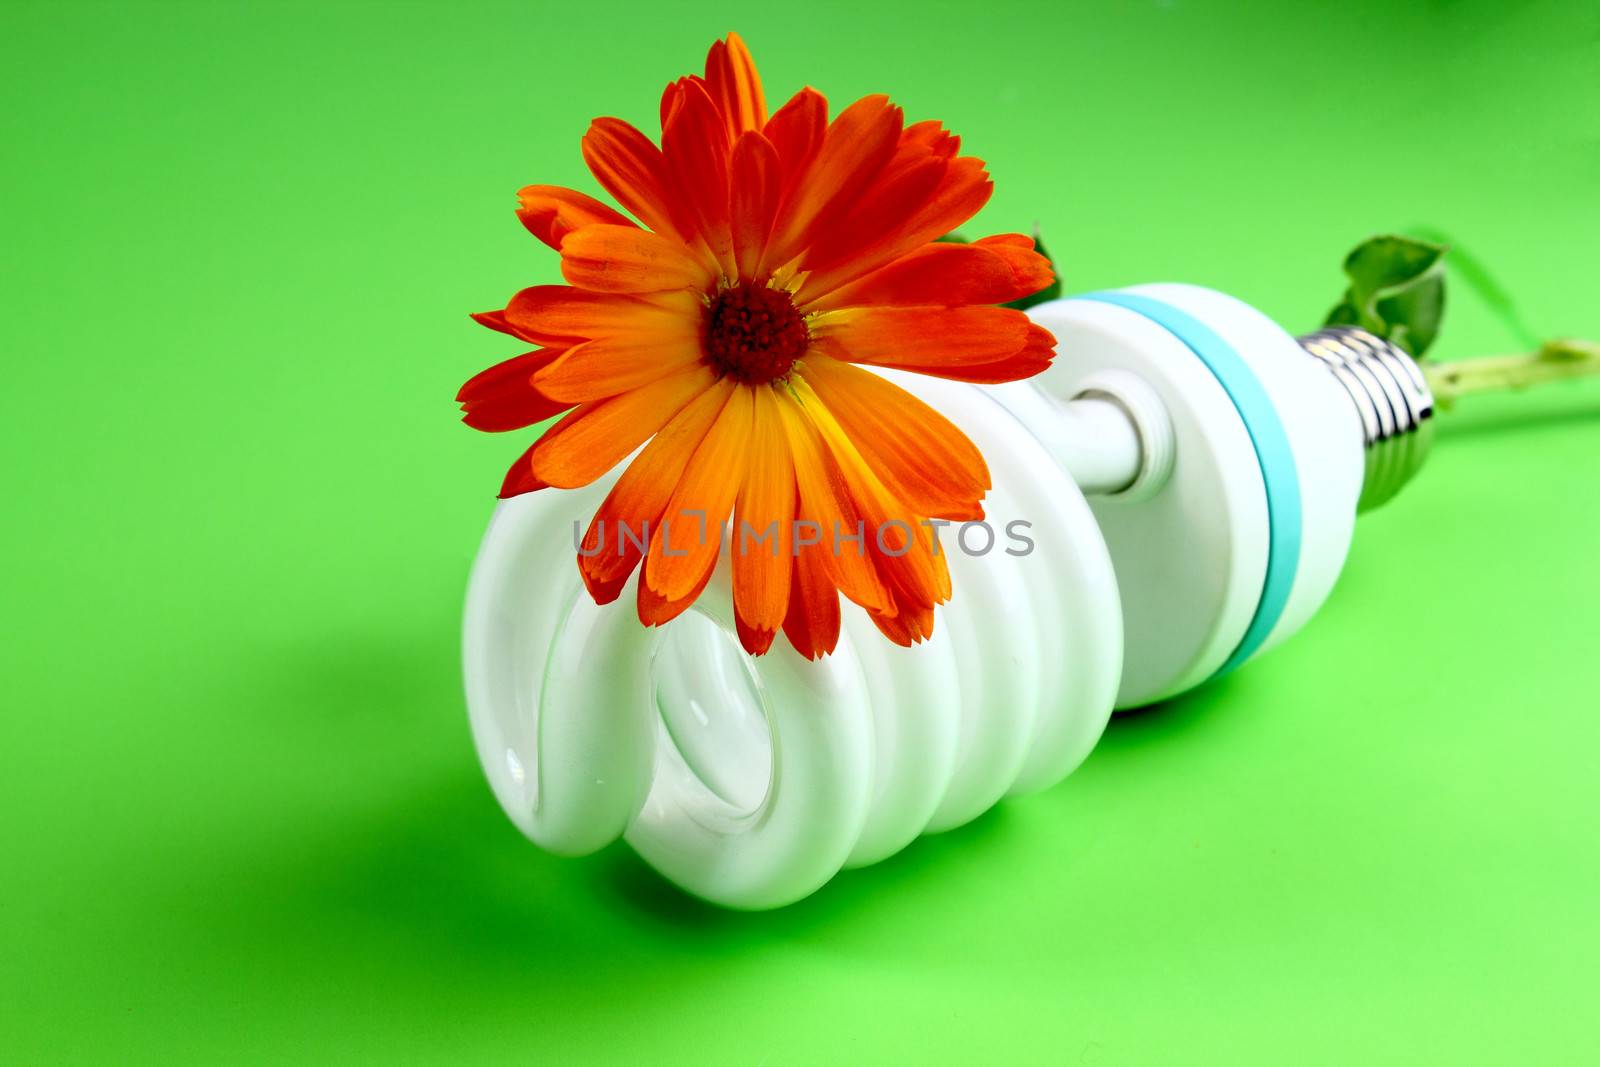 Economic light bulb, environmentally friendly concept